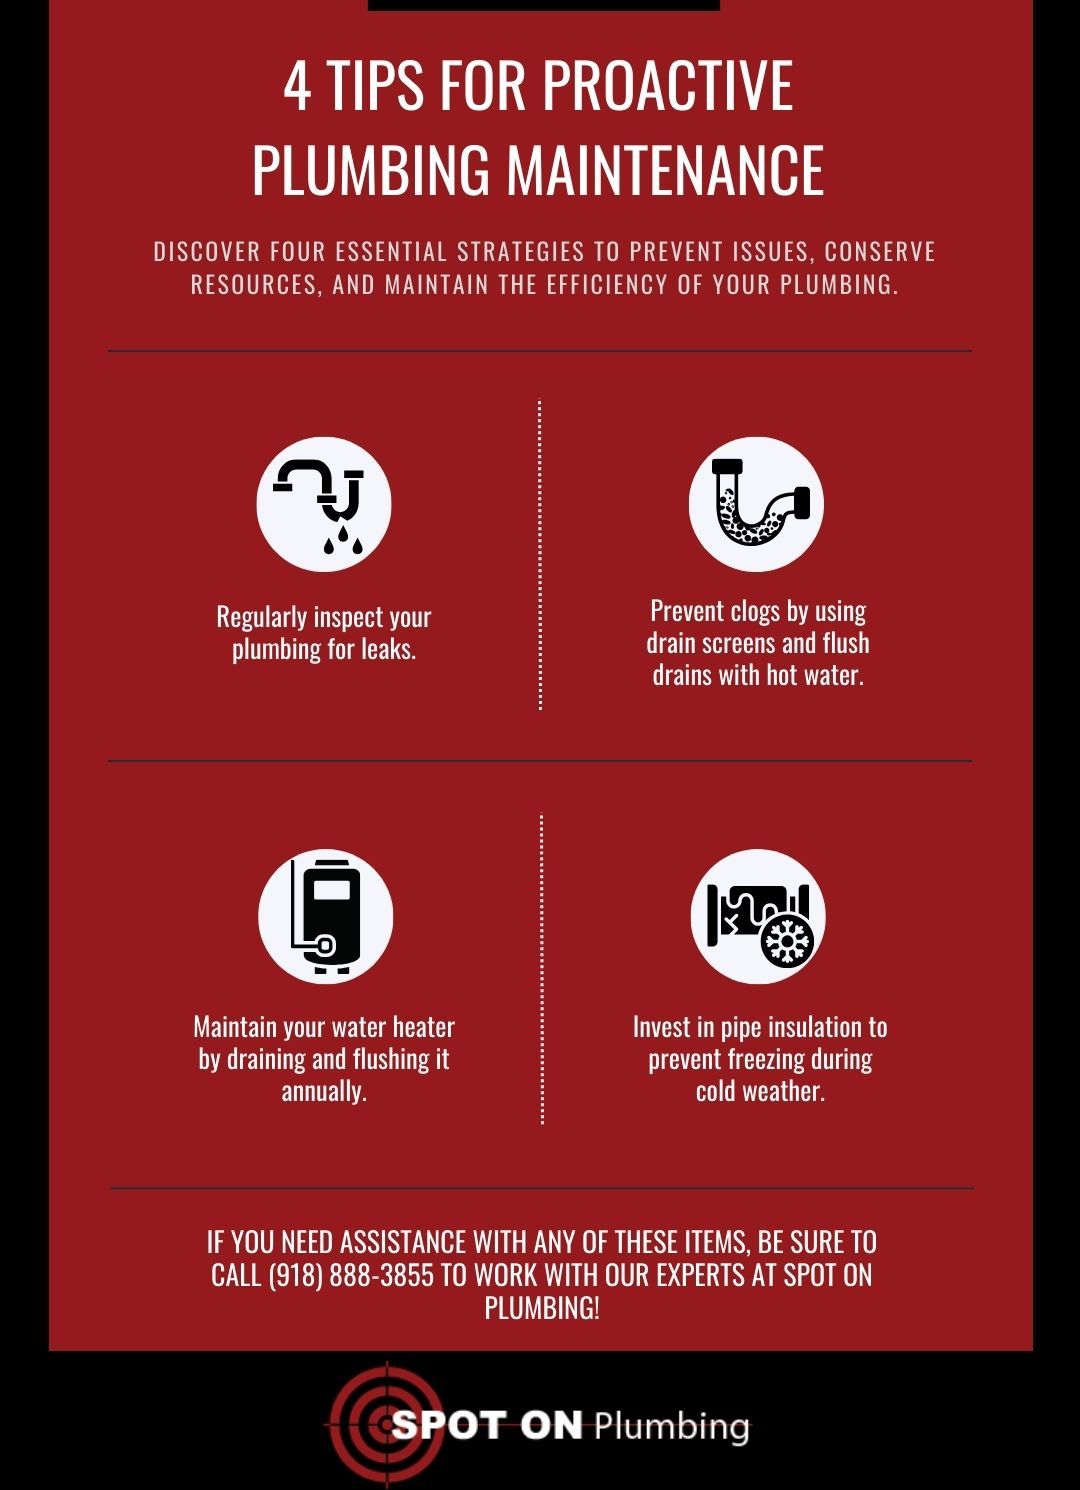 infographic giving 4 tip on proactive plumbing maintenance